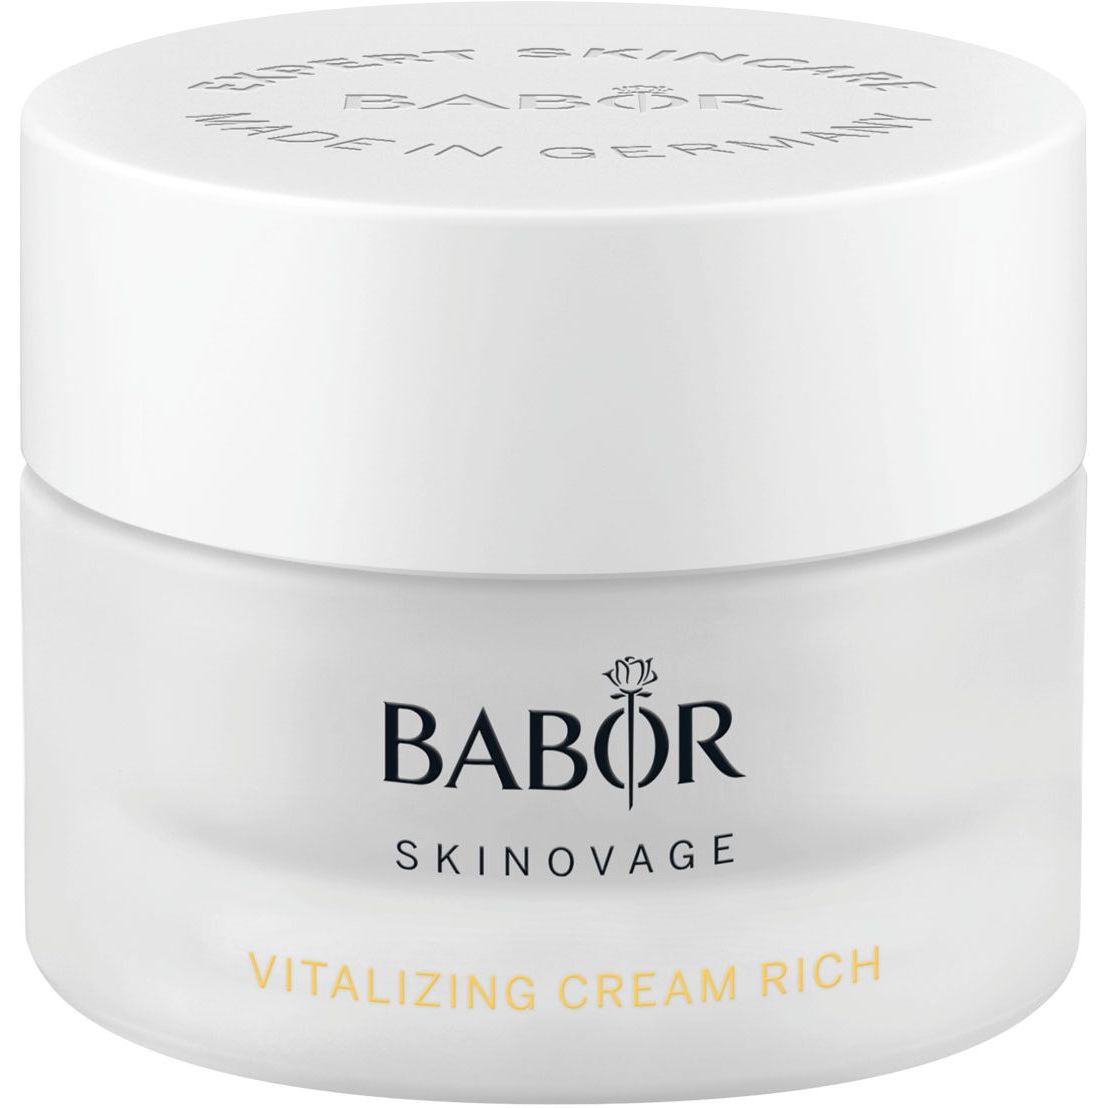 Крем для сияния кожи Babor Skinovage Vitalizing Cream Rich 50 мл - фото 1